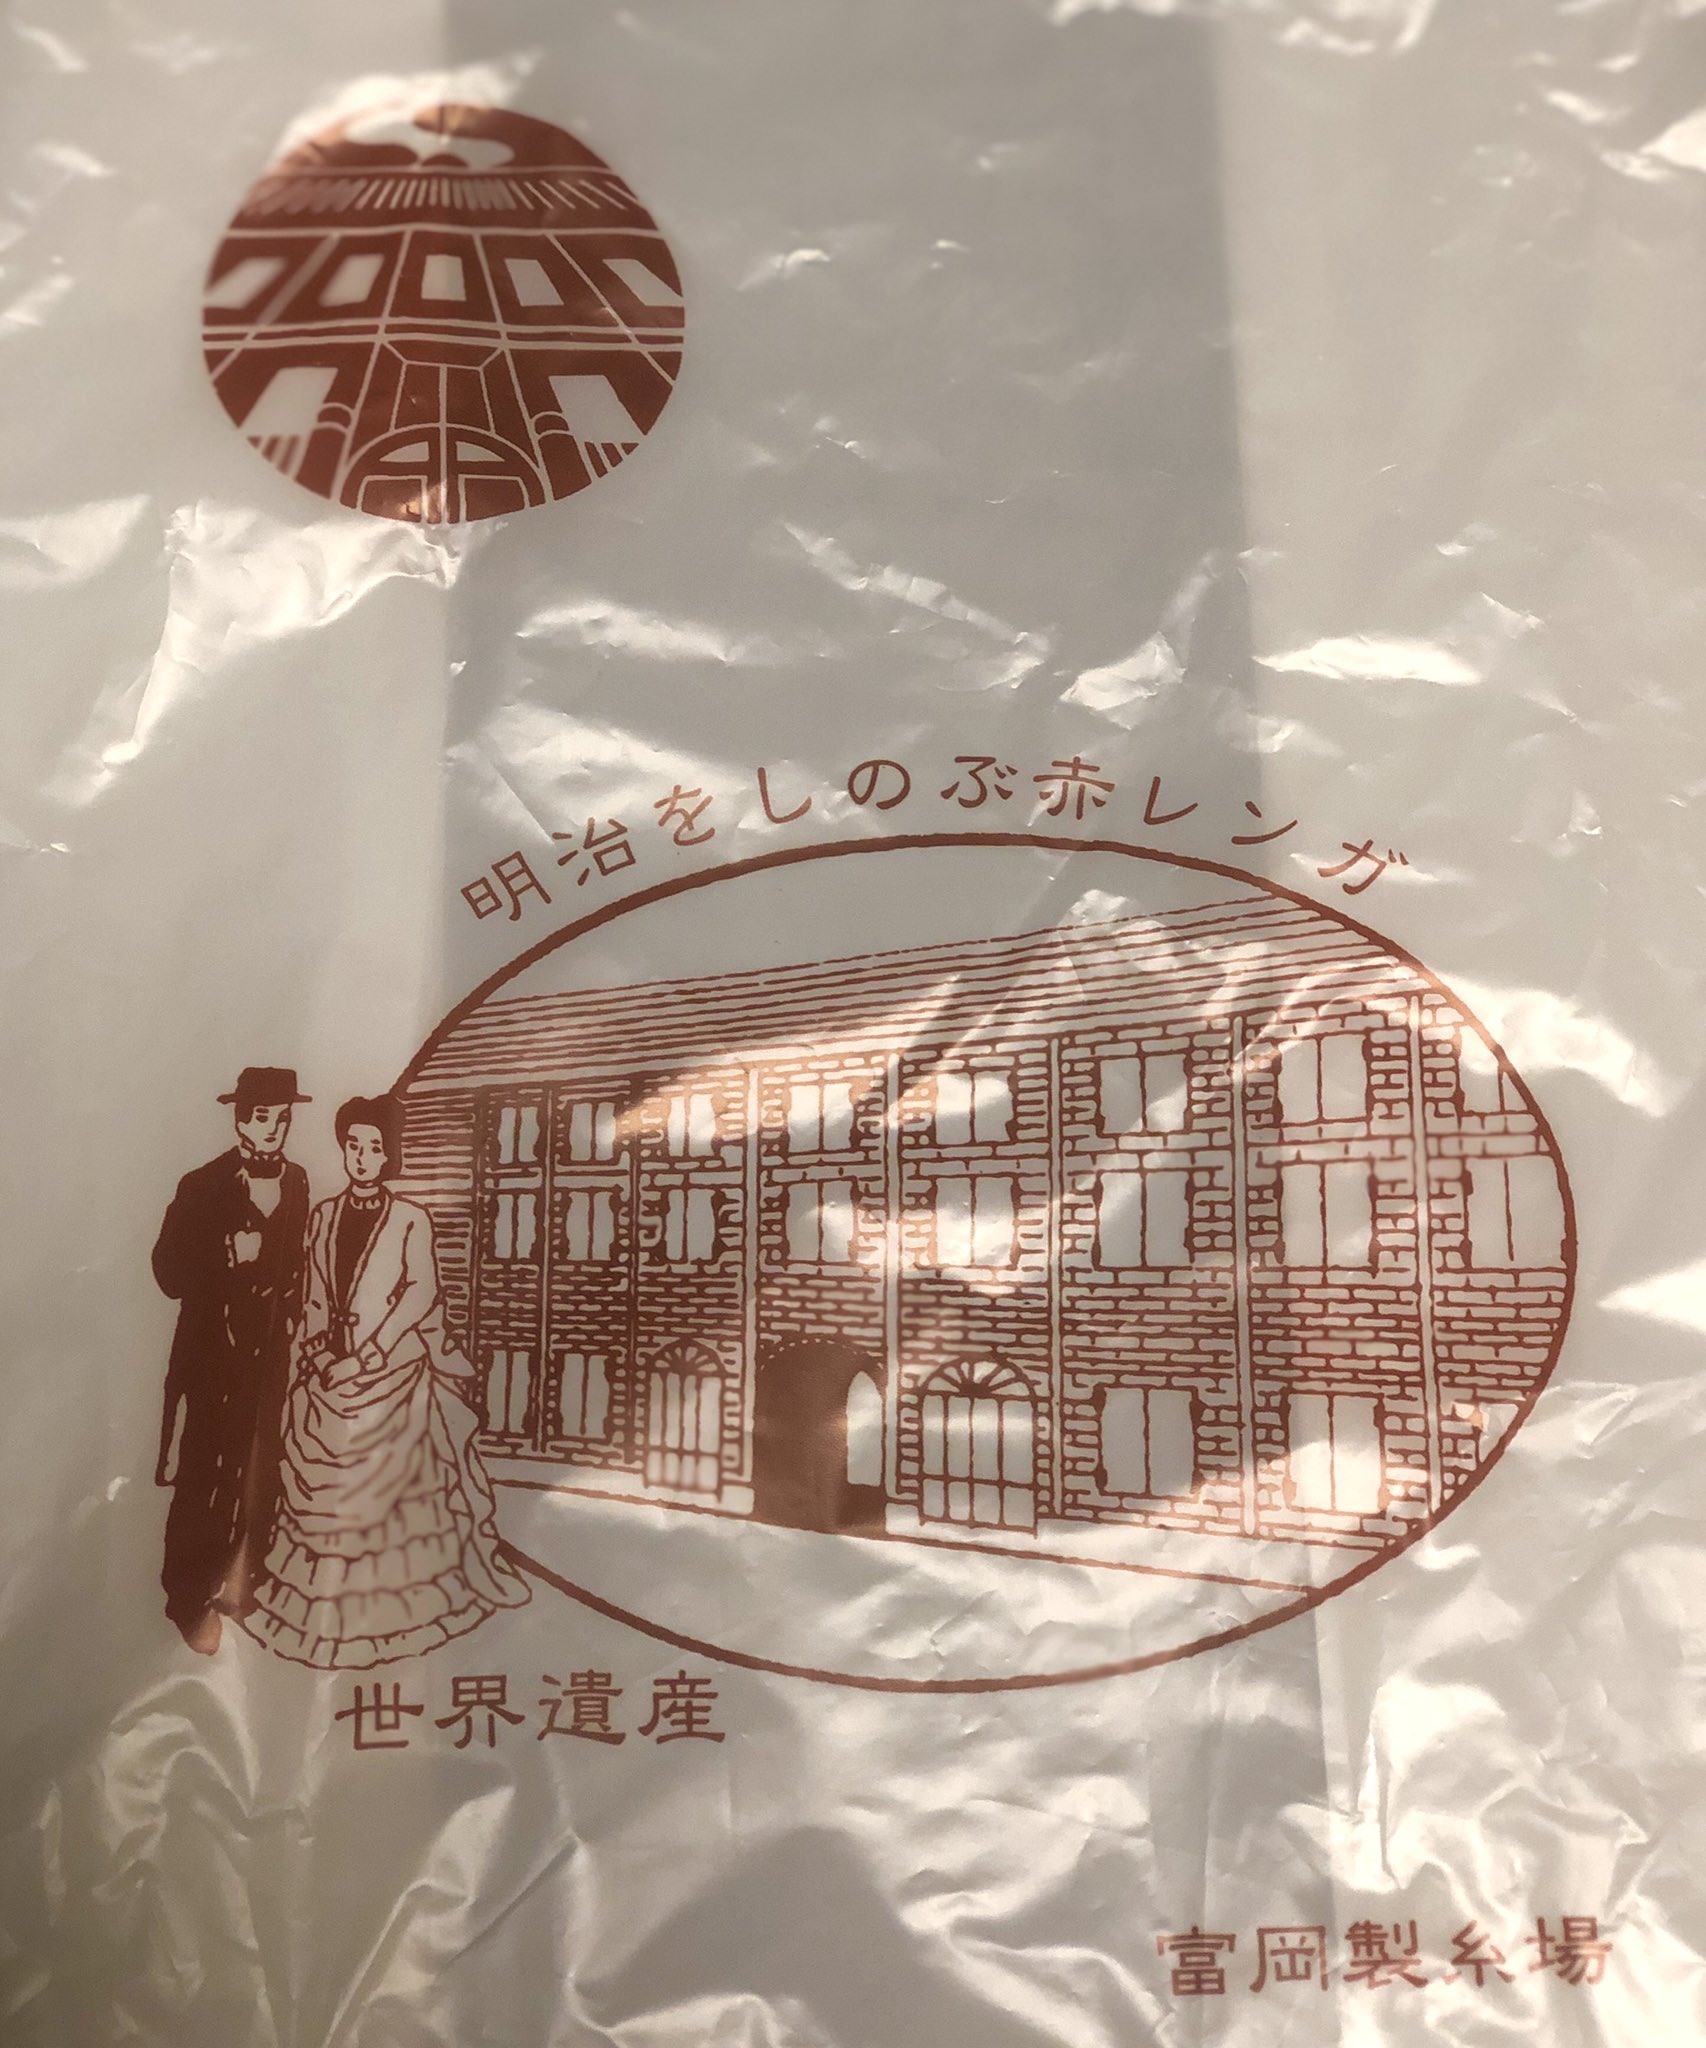 Sachika 富岡製糸場のビニール袋のイラストかわいい T Co Pgu81afvxr Twitter